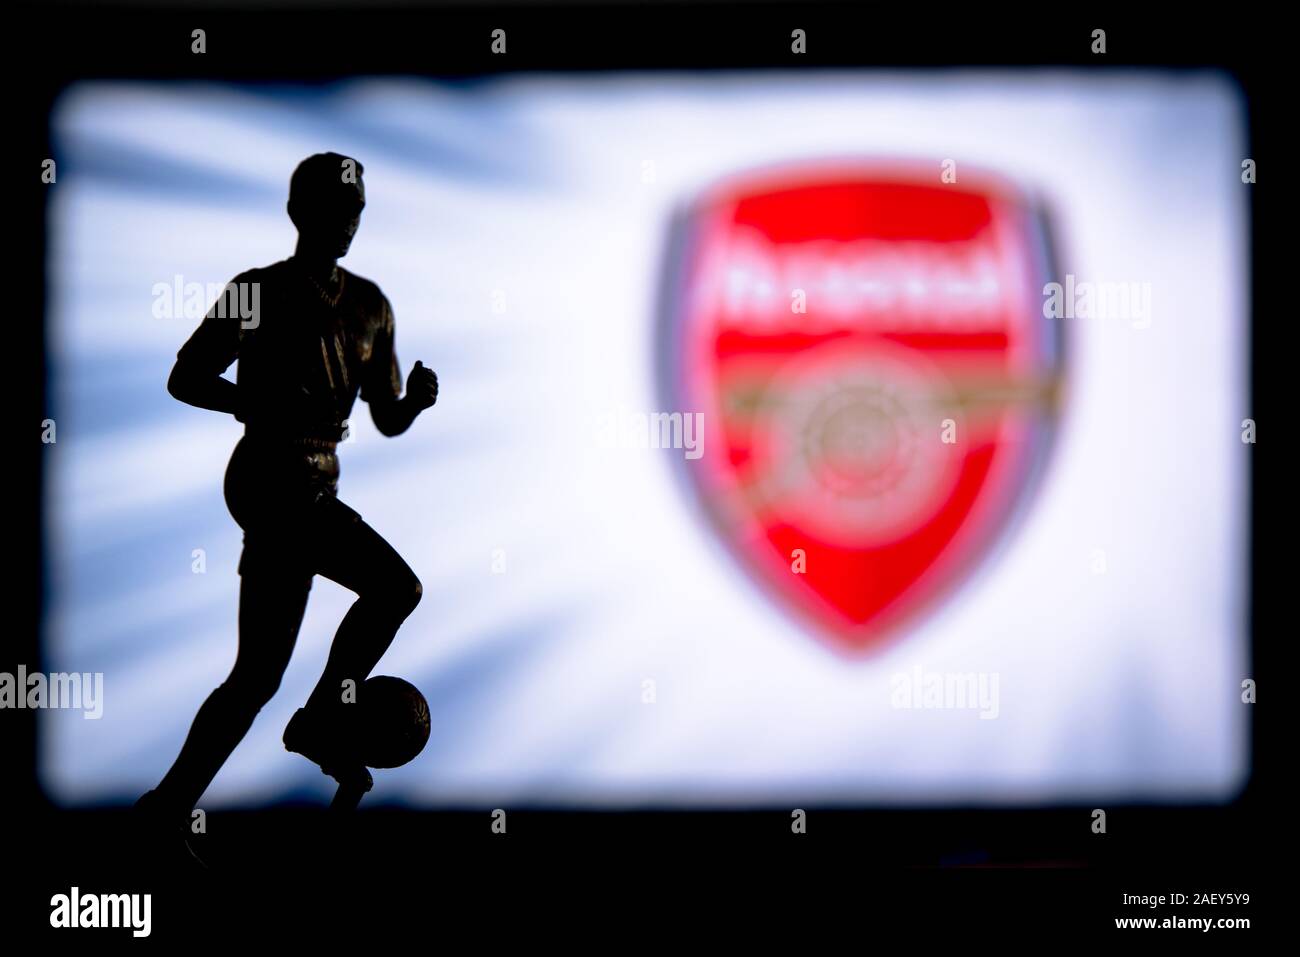 LONDON, ENGLAND, JULY. 1. 2019: Arsenal Football club logo, Premier League, England. Soccer player silhouette. Stock Photo